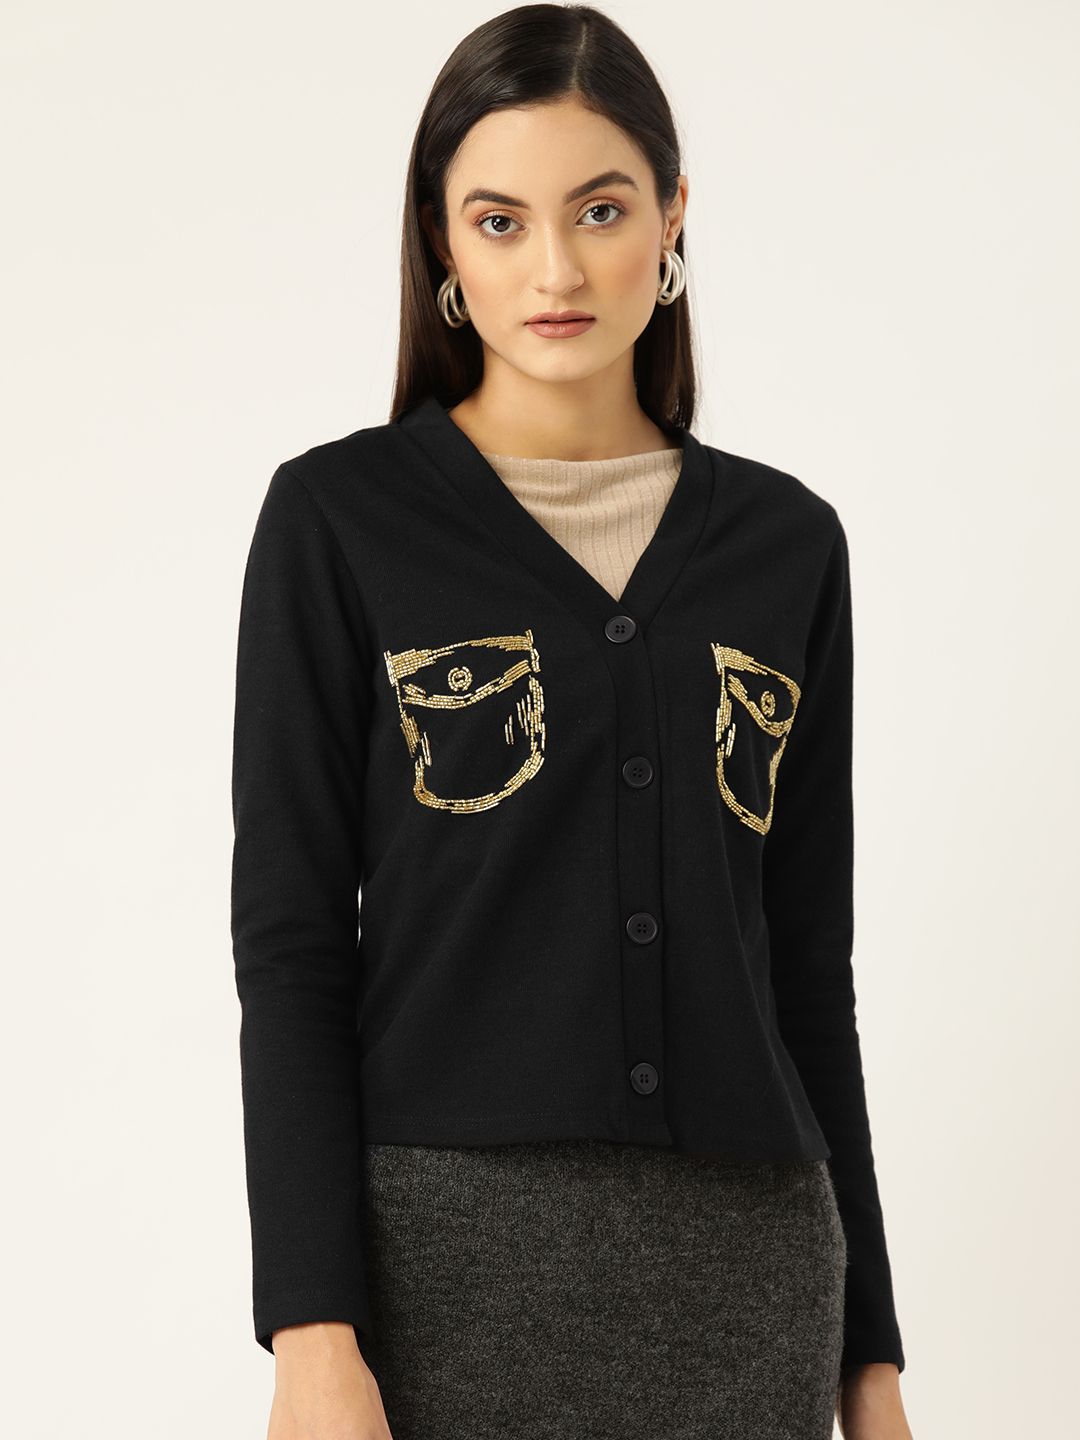 KASSUALLY Women Black Embellished Cardigan Sweater Price in India